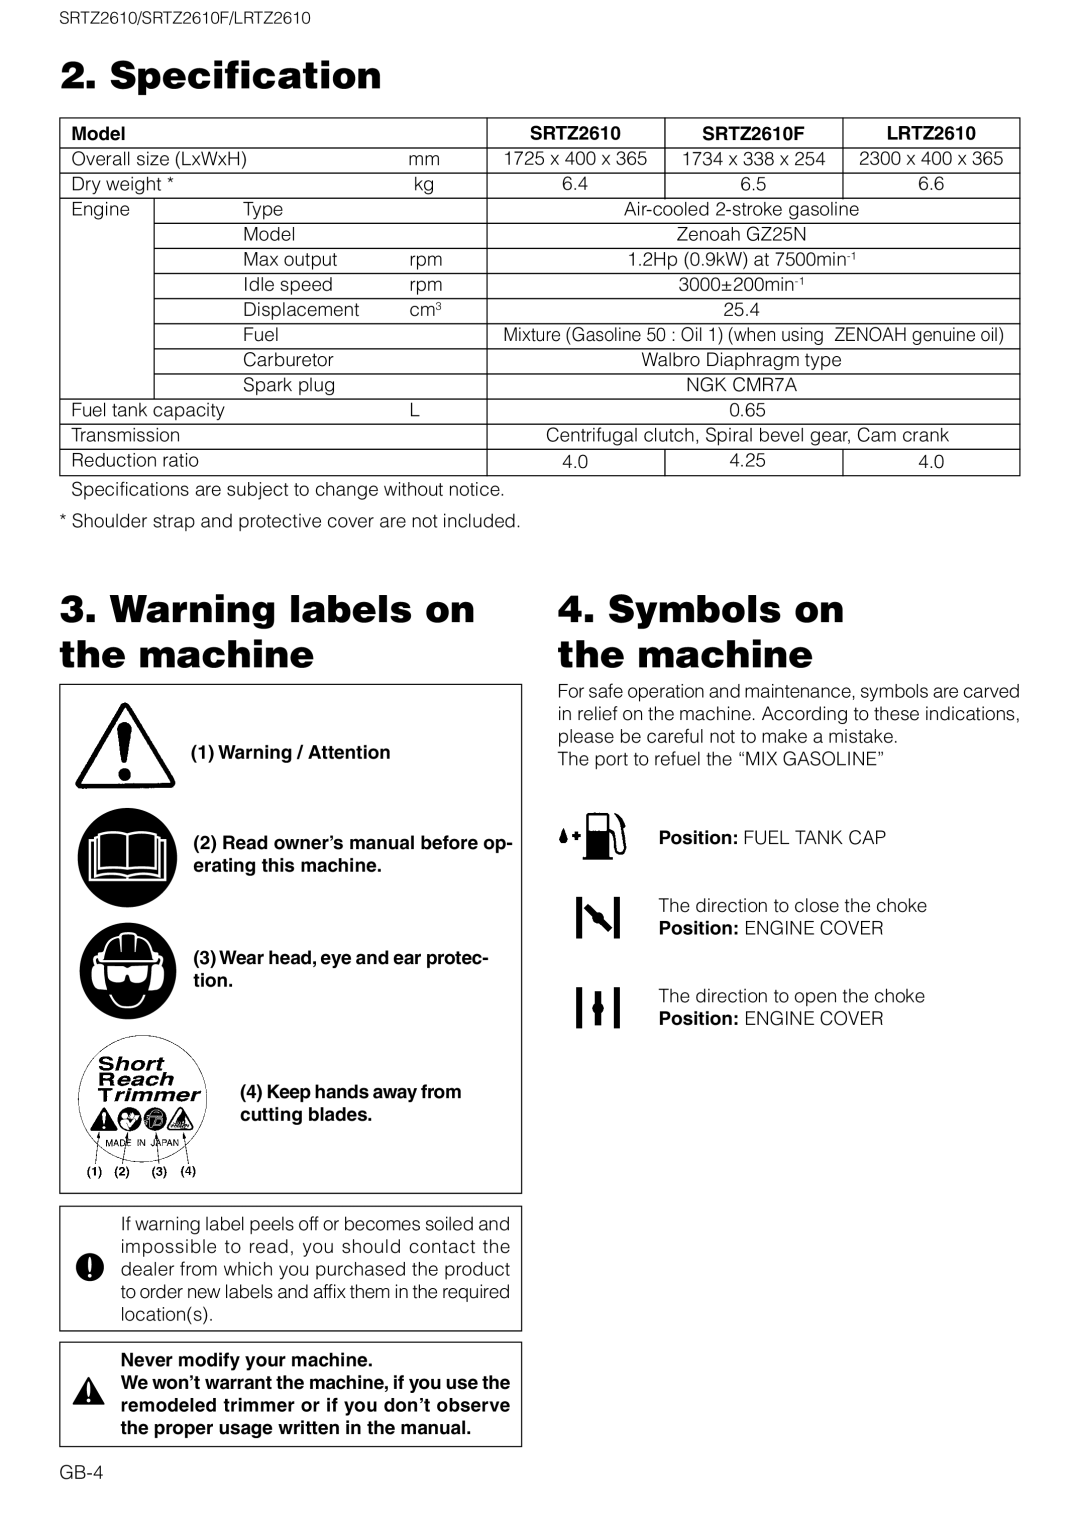 Zenoah owner manual Specification, Warning labels on the machine, Symbols on the machine, Model, SRTZ2610F, LRTZ2610 